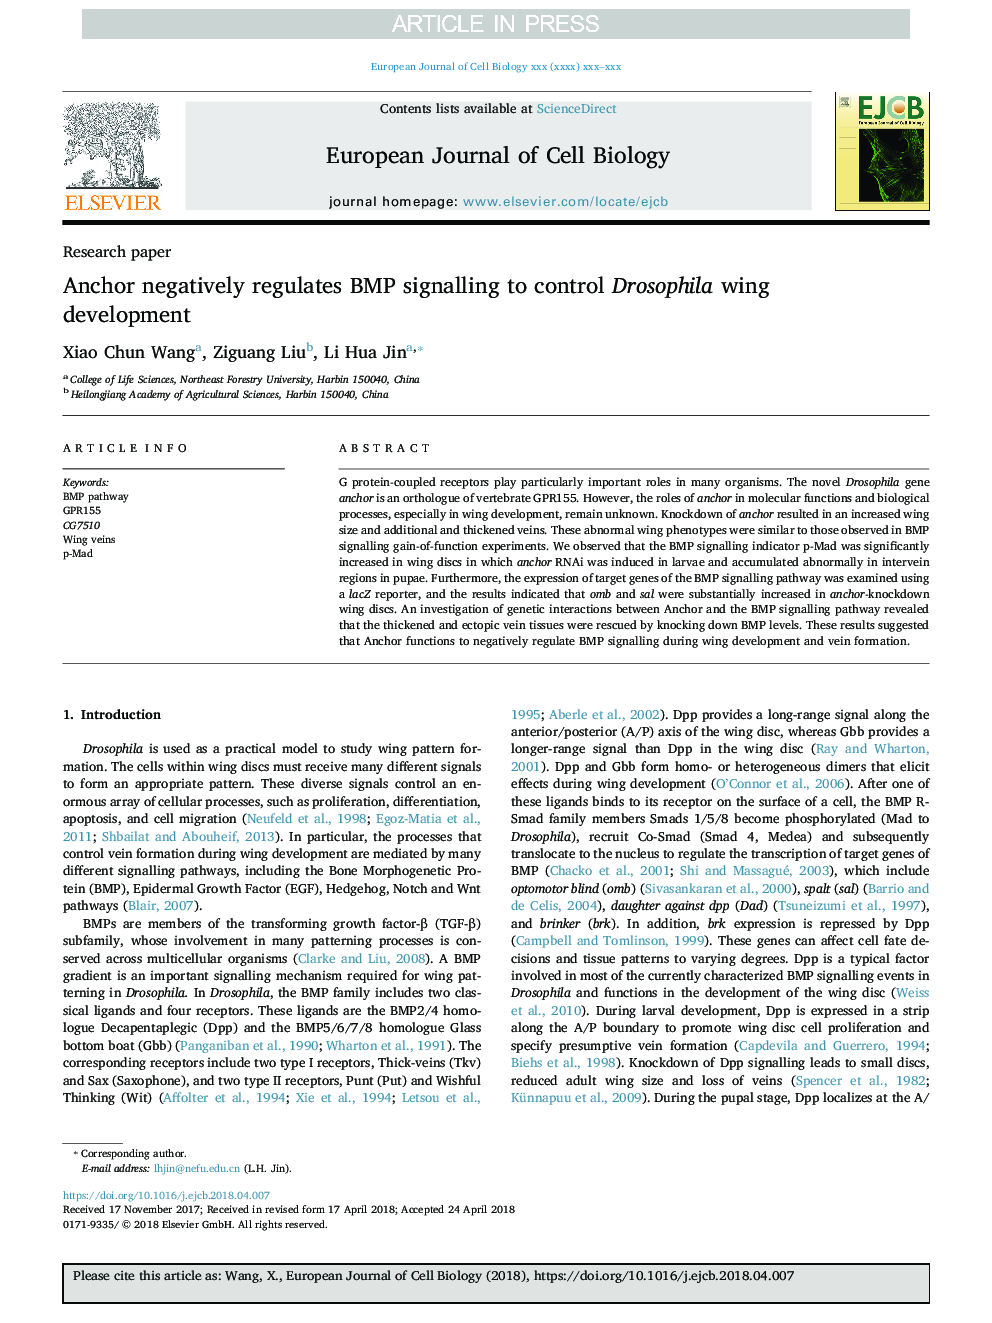 Anchor negatively regulates BMP signalling to control Drosophila wing development